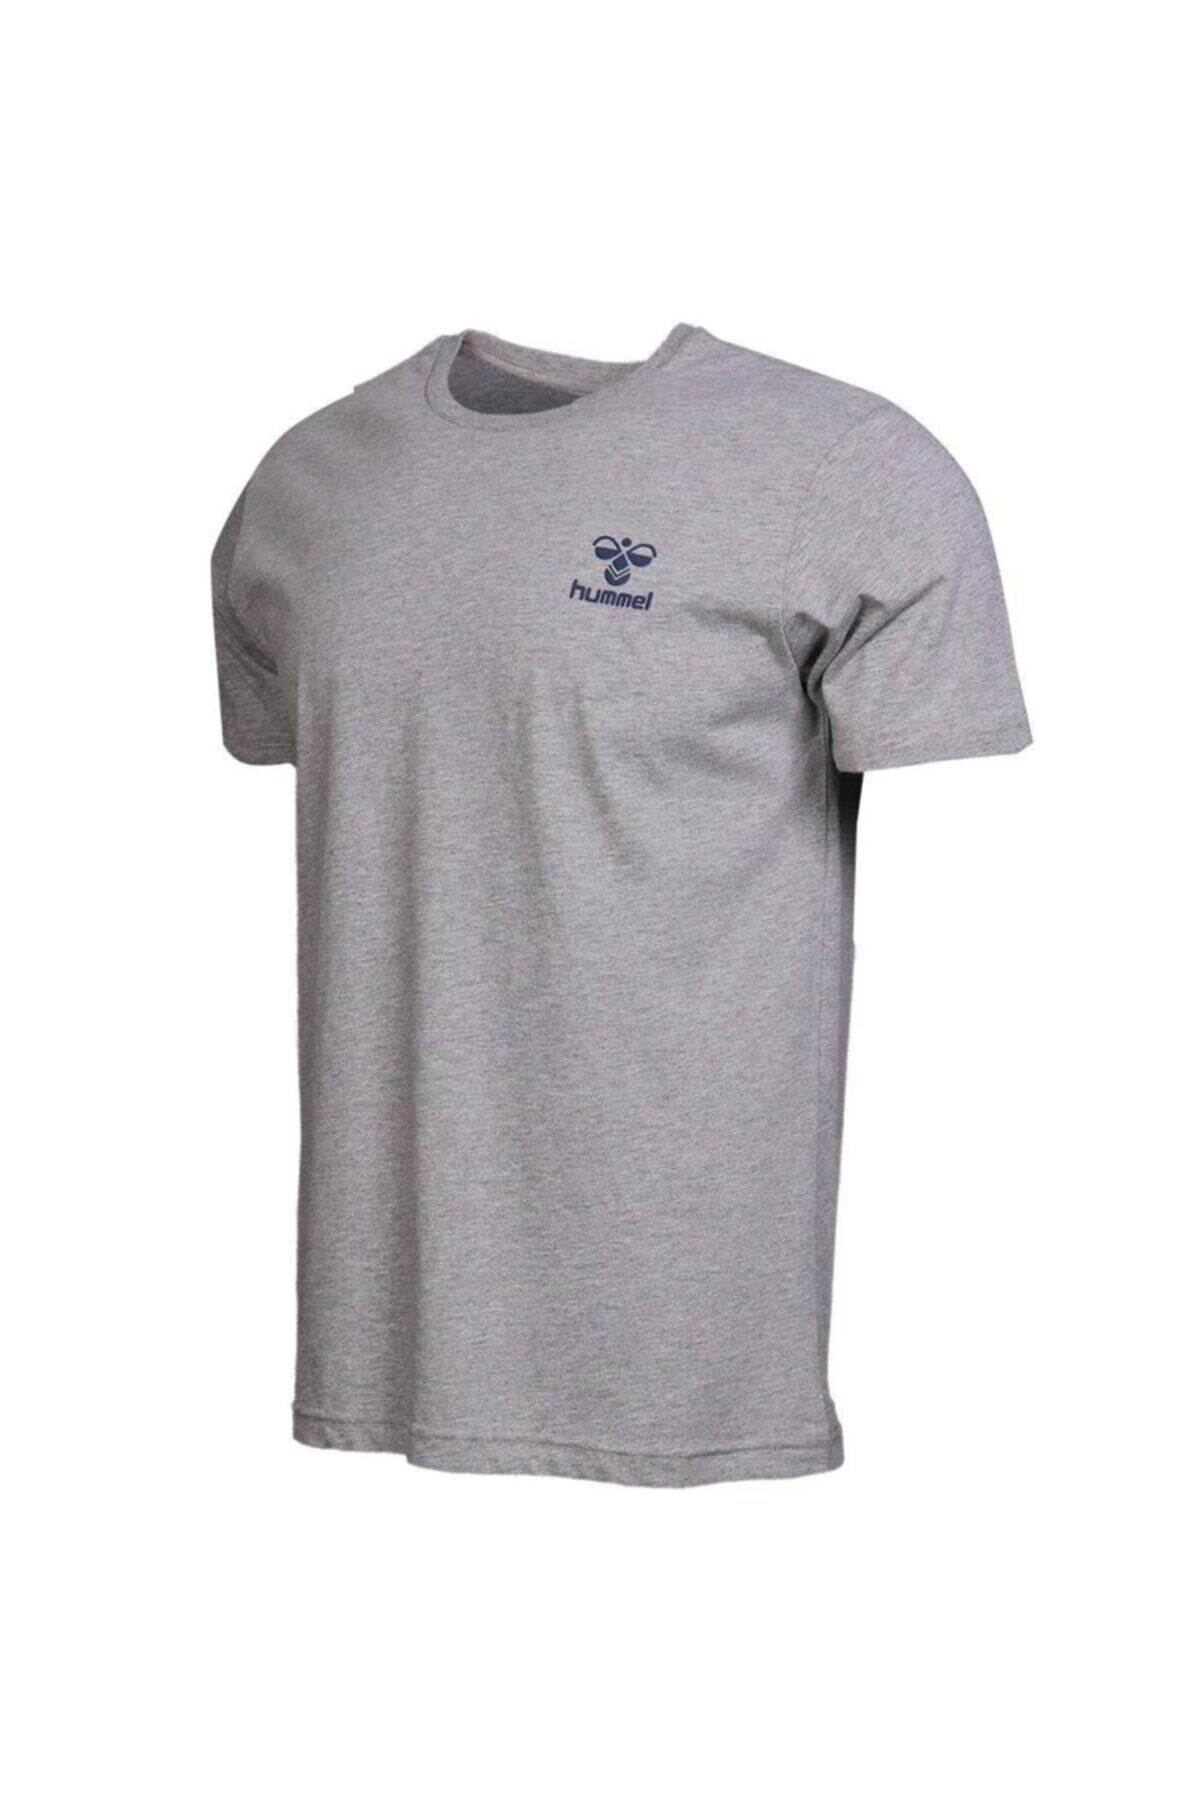 Trendyol - HUMMEL - - T-Shirt Sport Figurbetont Grau